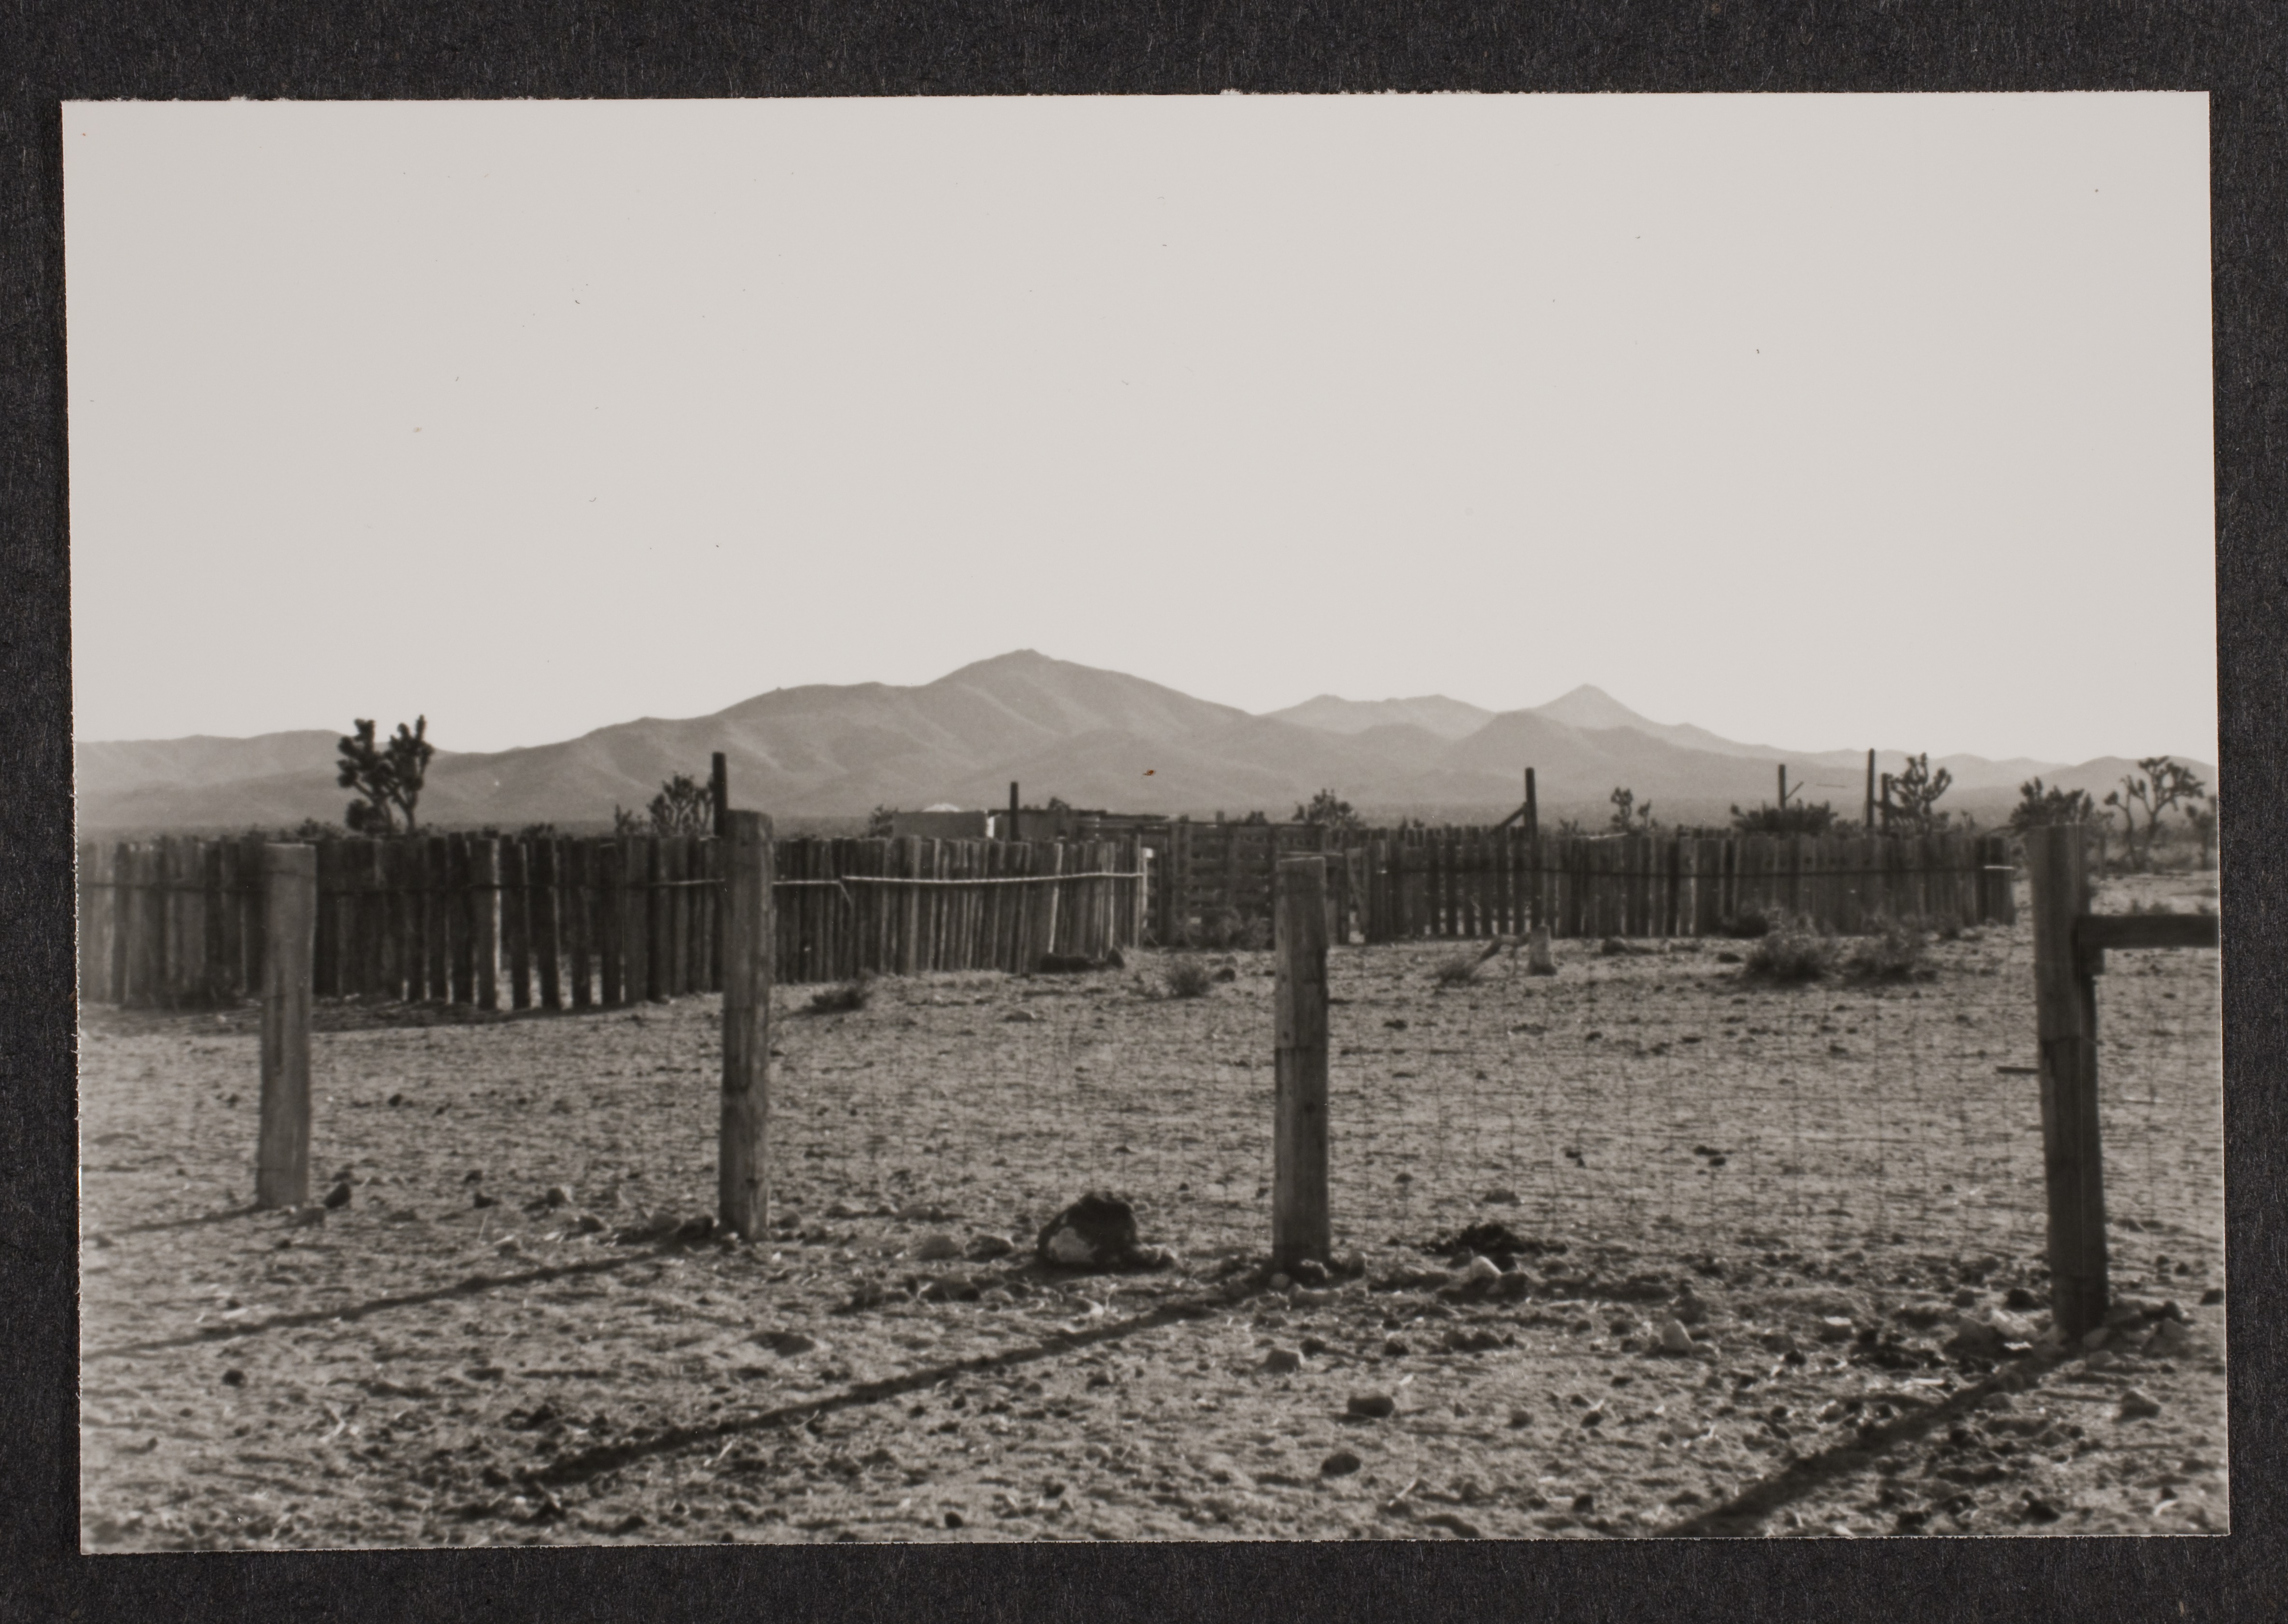 Empty corral at the Walking Box Ranch, Nevada: photographic print